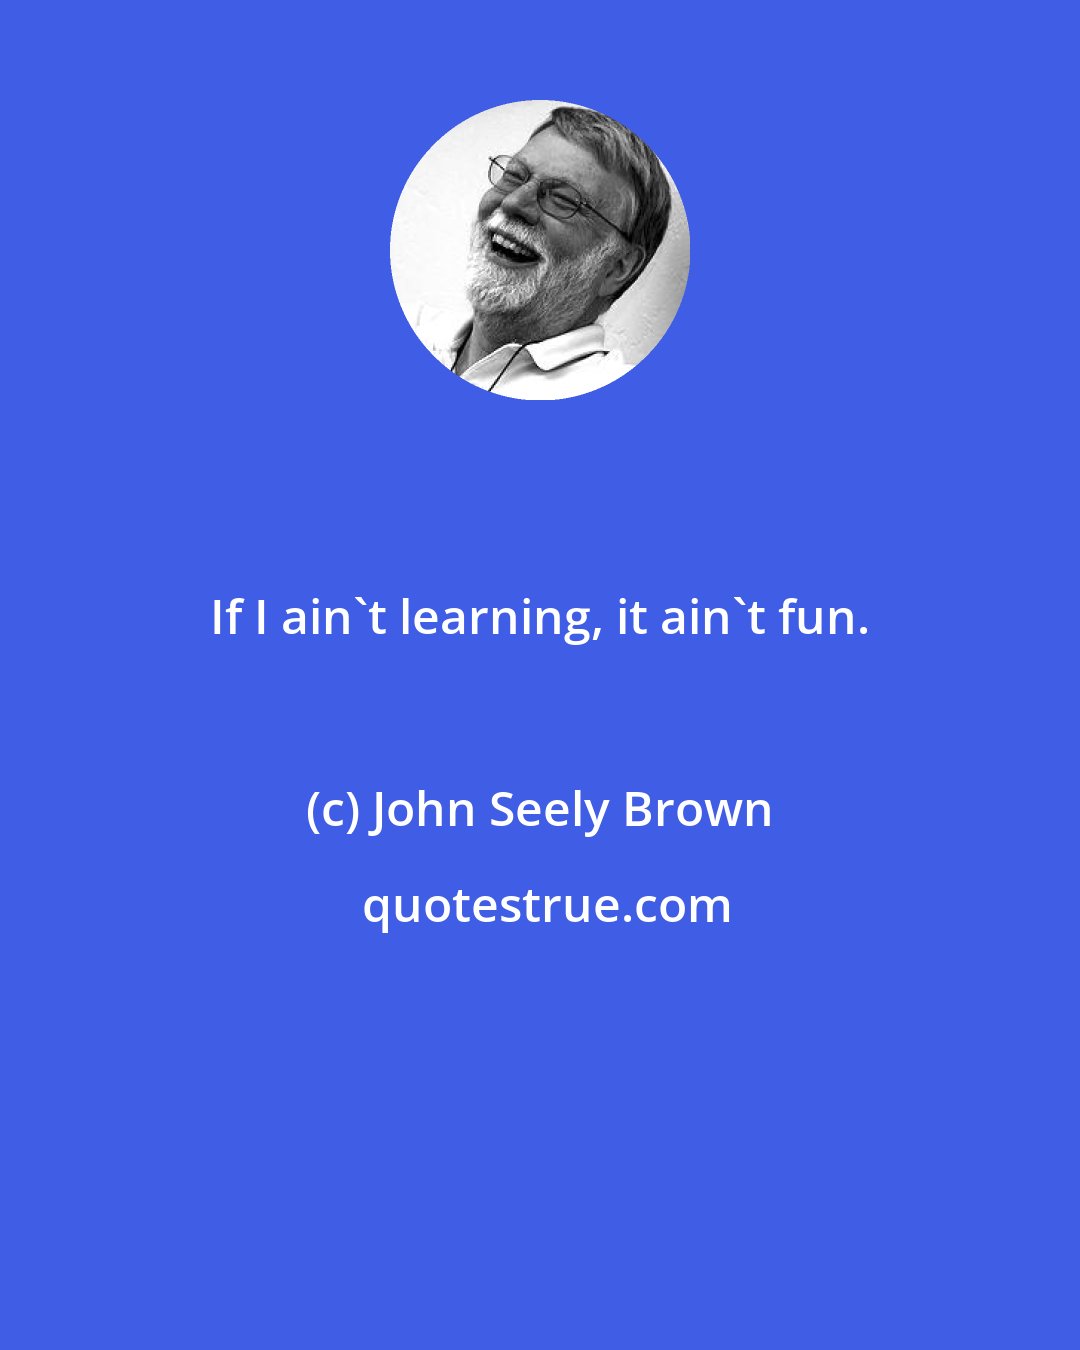 John Seely Brown: If I ain't learning, it ain't fun.